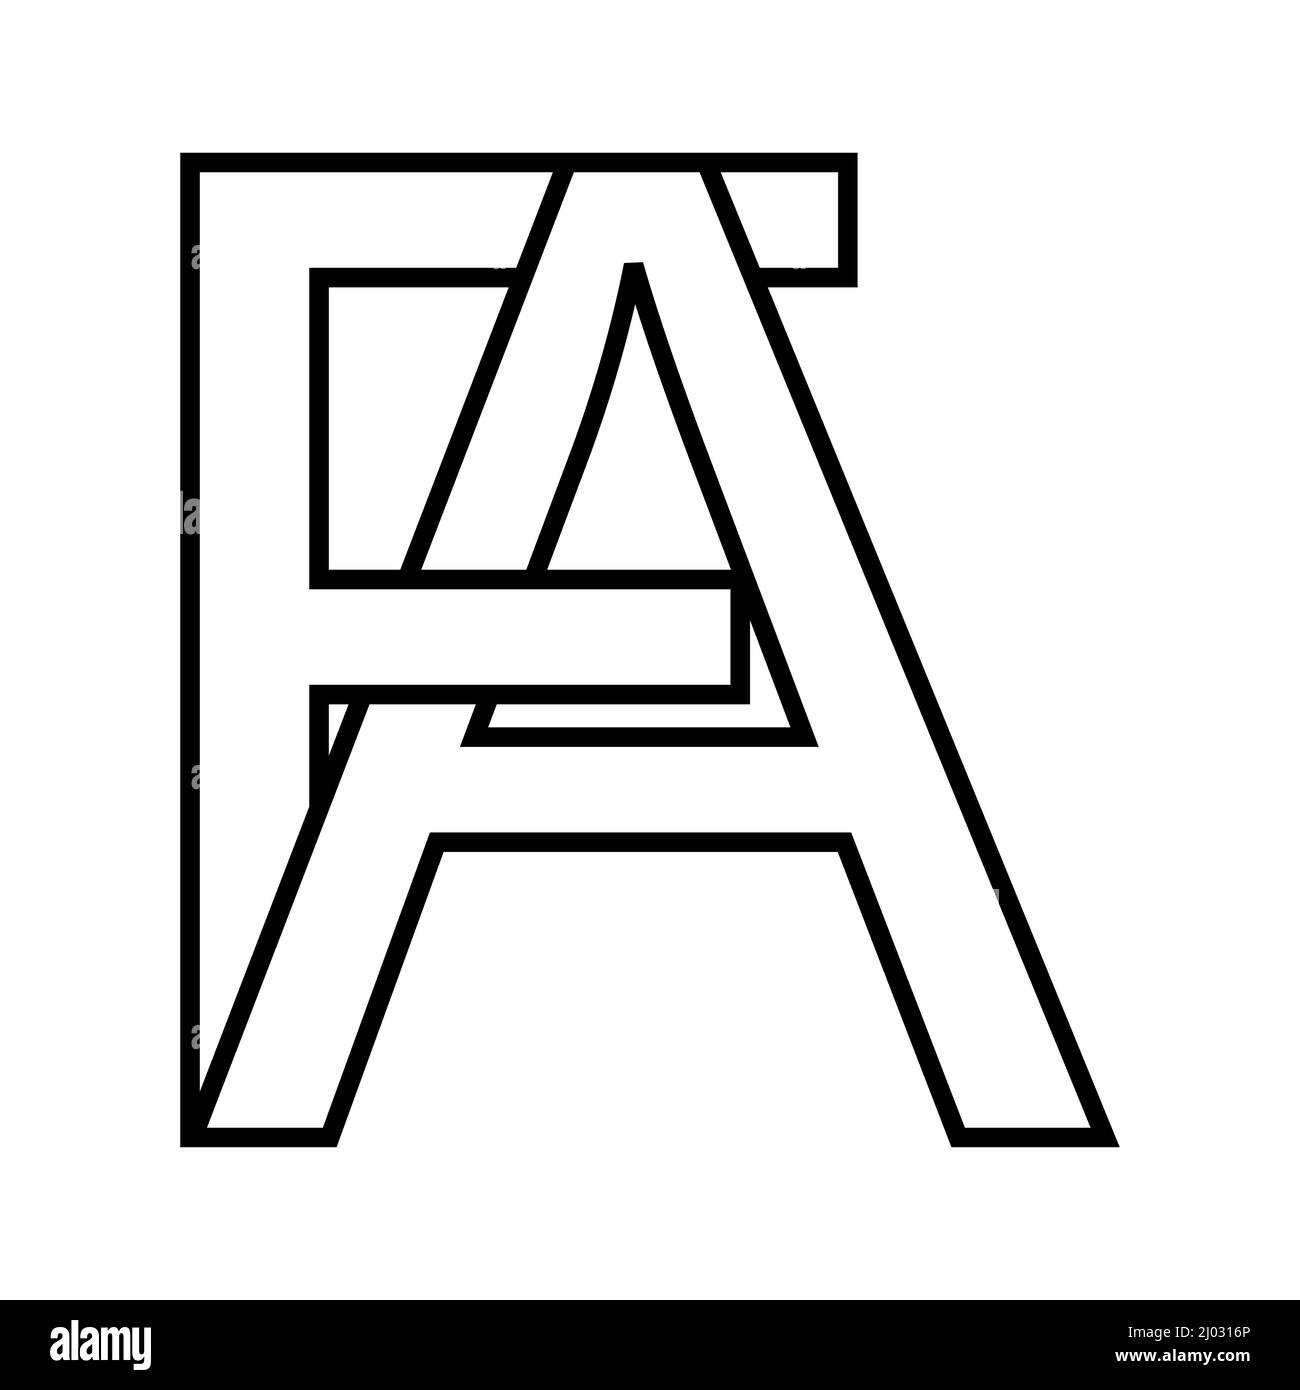 Logo sign, fa af icon nft, fa interlaced letters f a Stock Vector